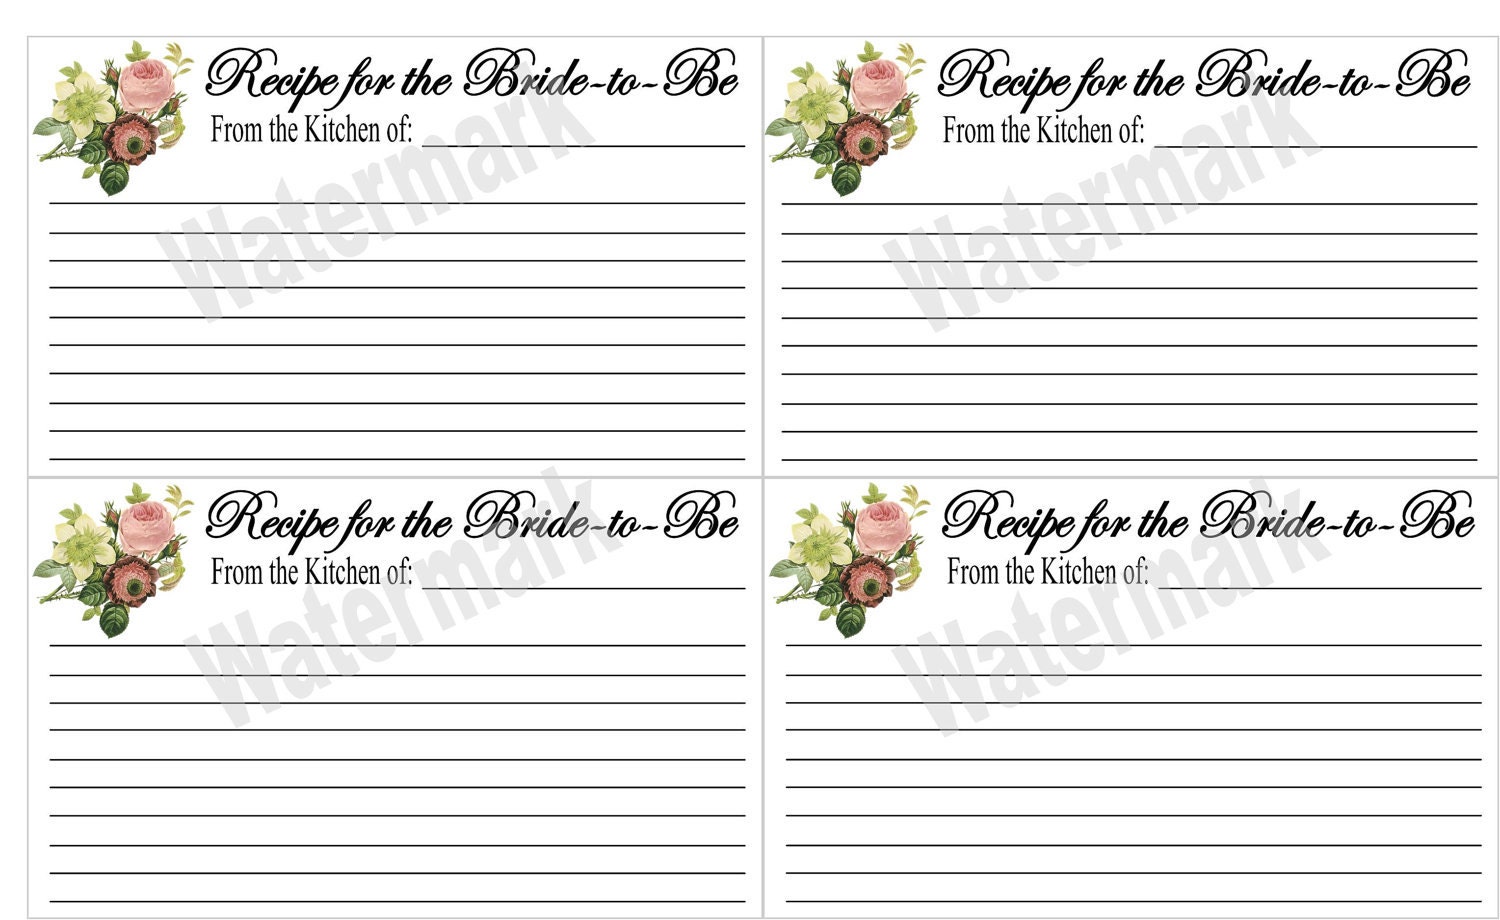 bridal-shower-recipe-cards-printable-by-kjones4099-on-etsy